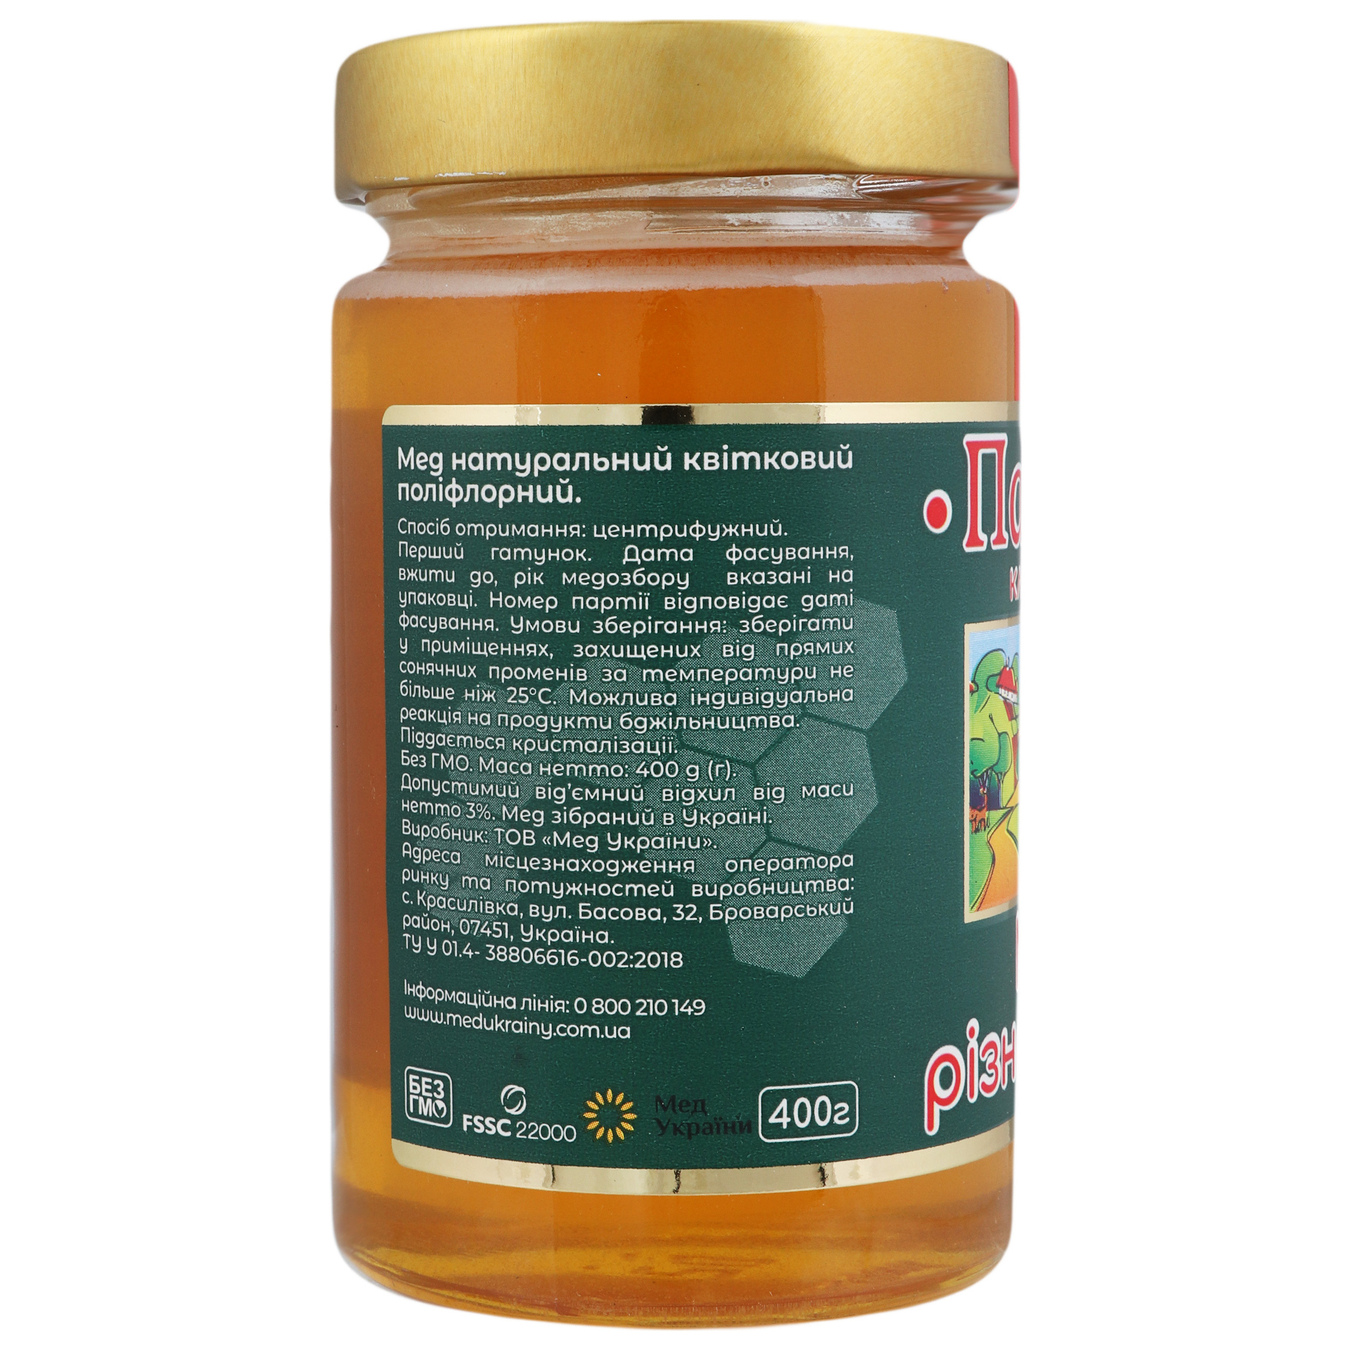 Apiary natural multi-herb honey Apiary glass jar 400g 3